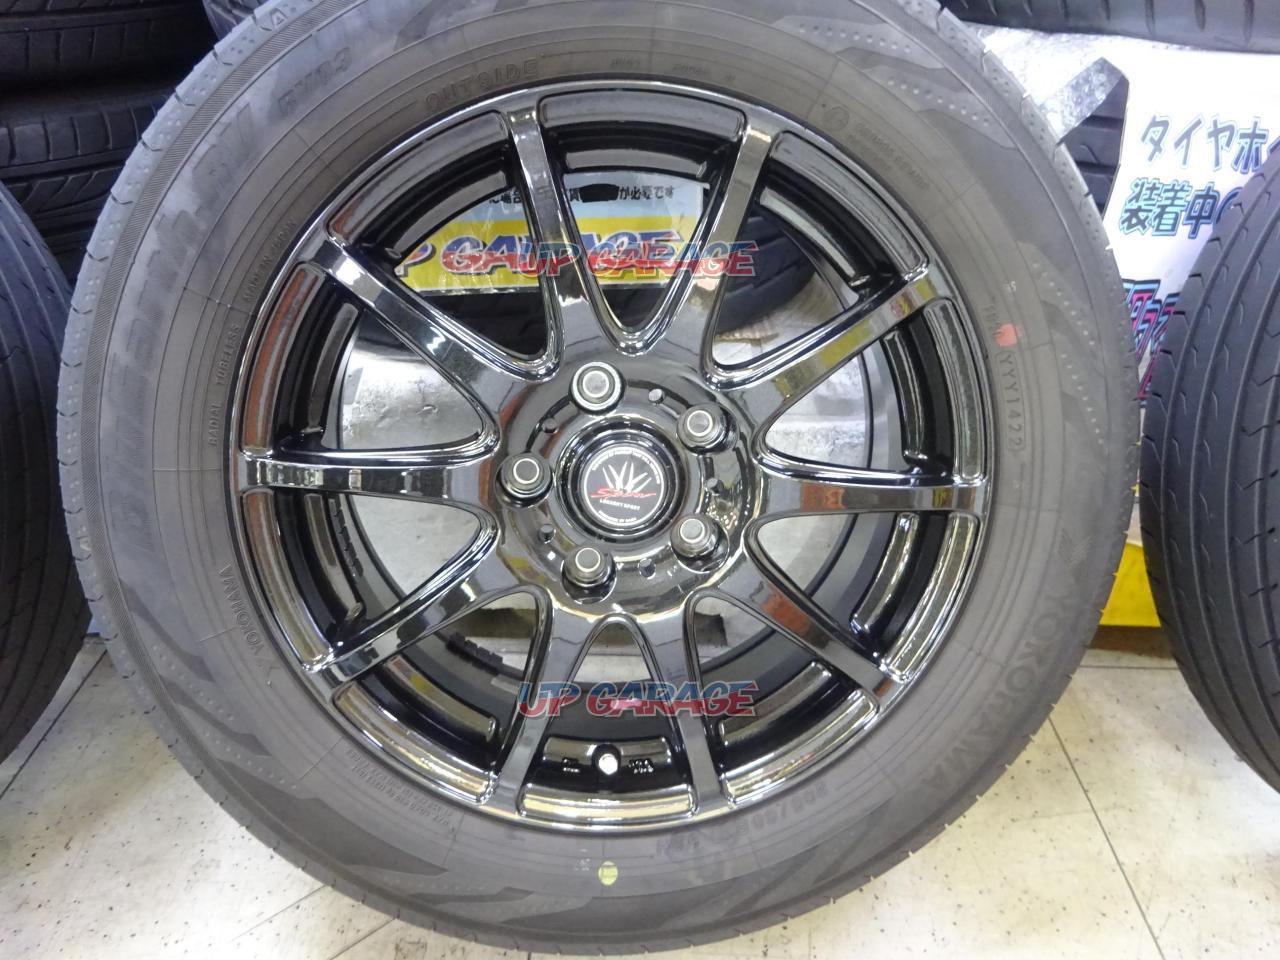 BADX LOXARNY SPORT RS + YOKOHAMA BluEarth RV RV   タイヤ